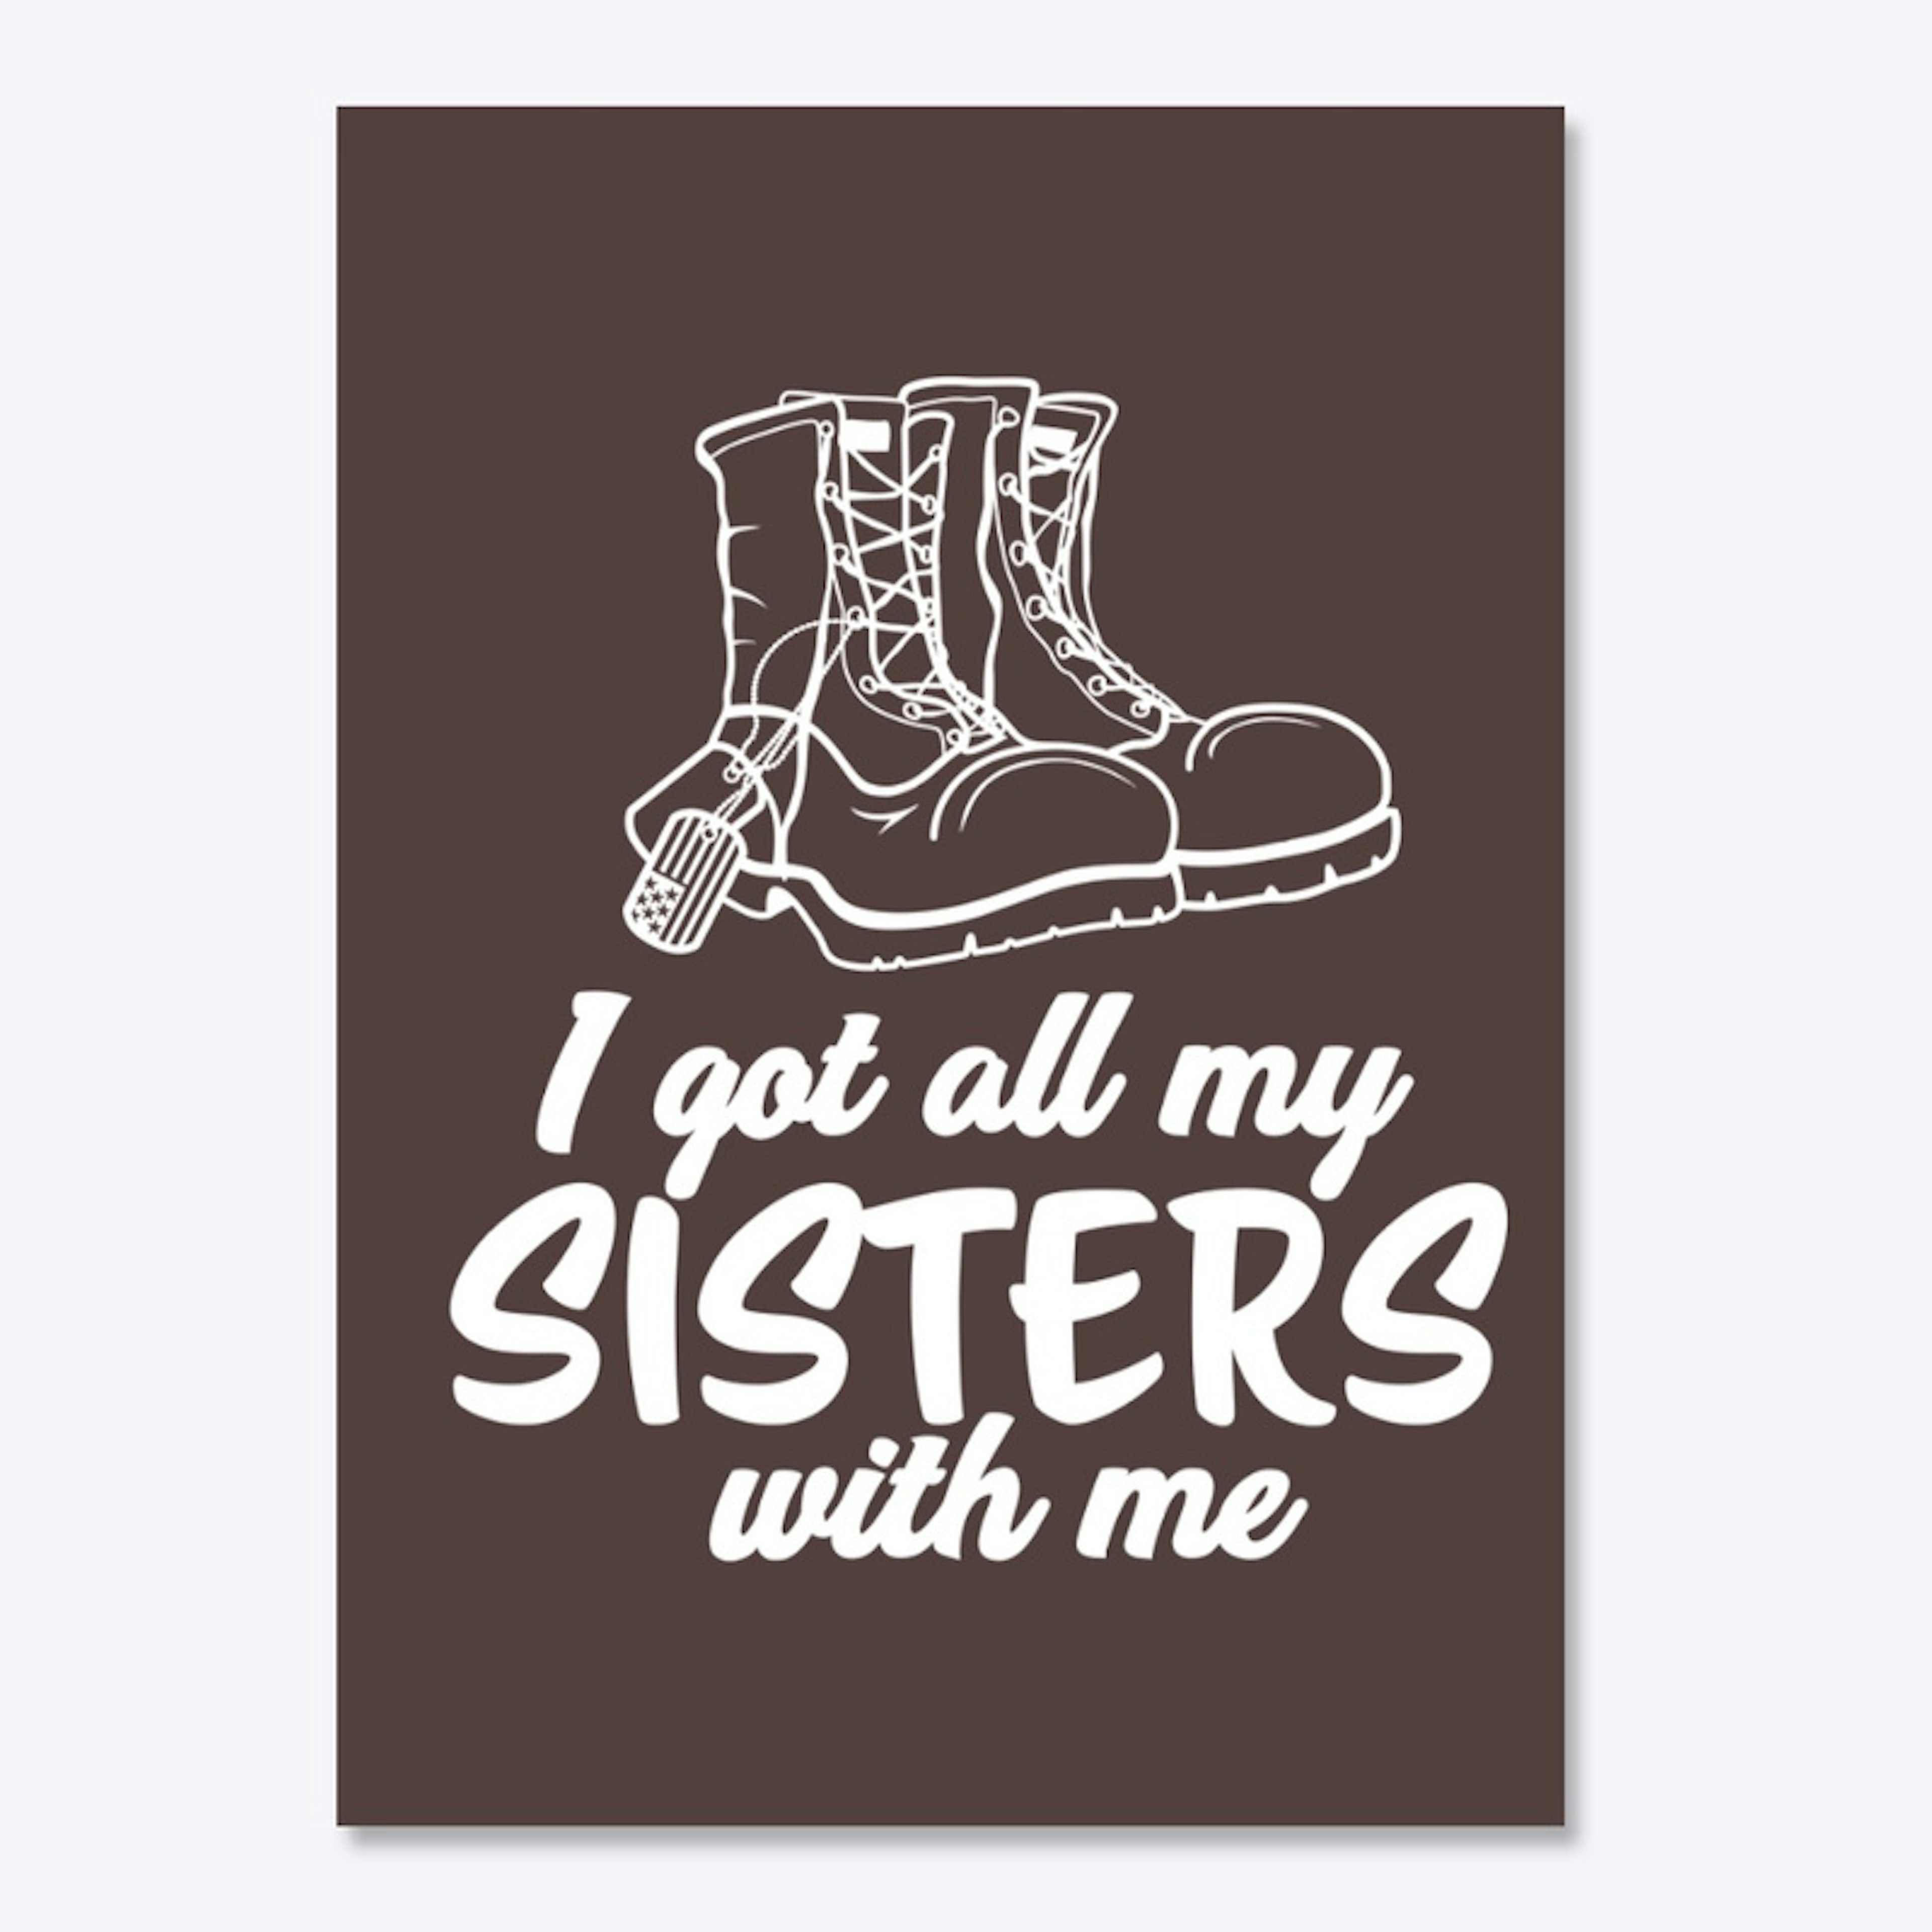 I got all my sisters